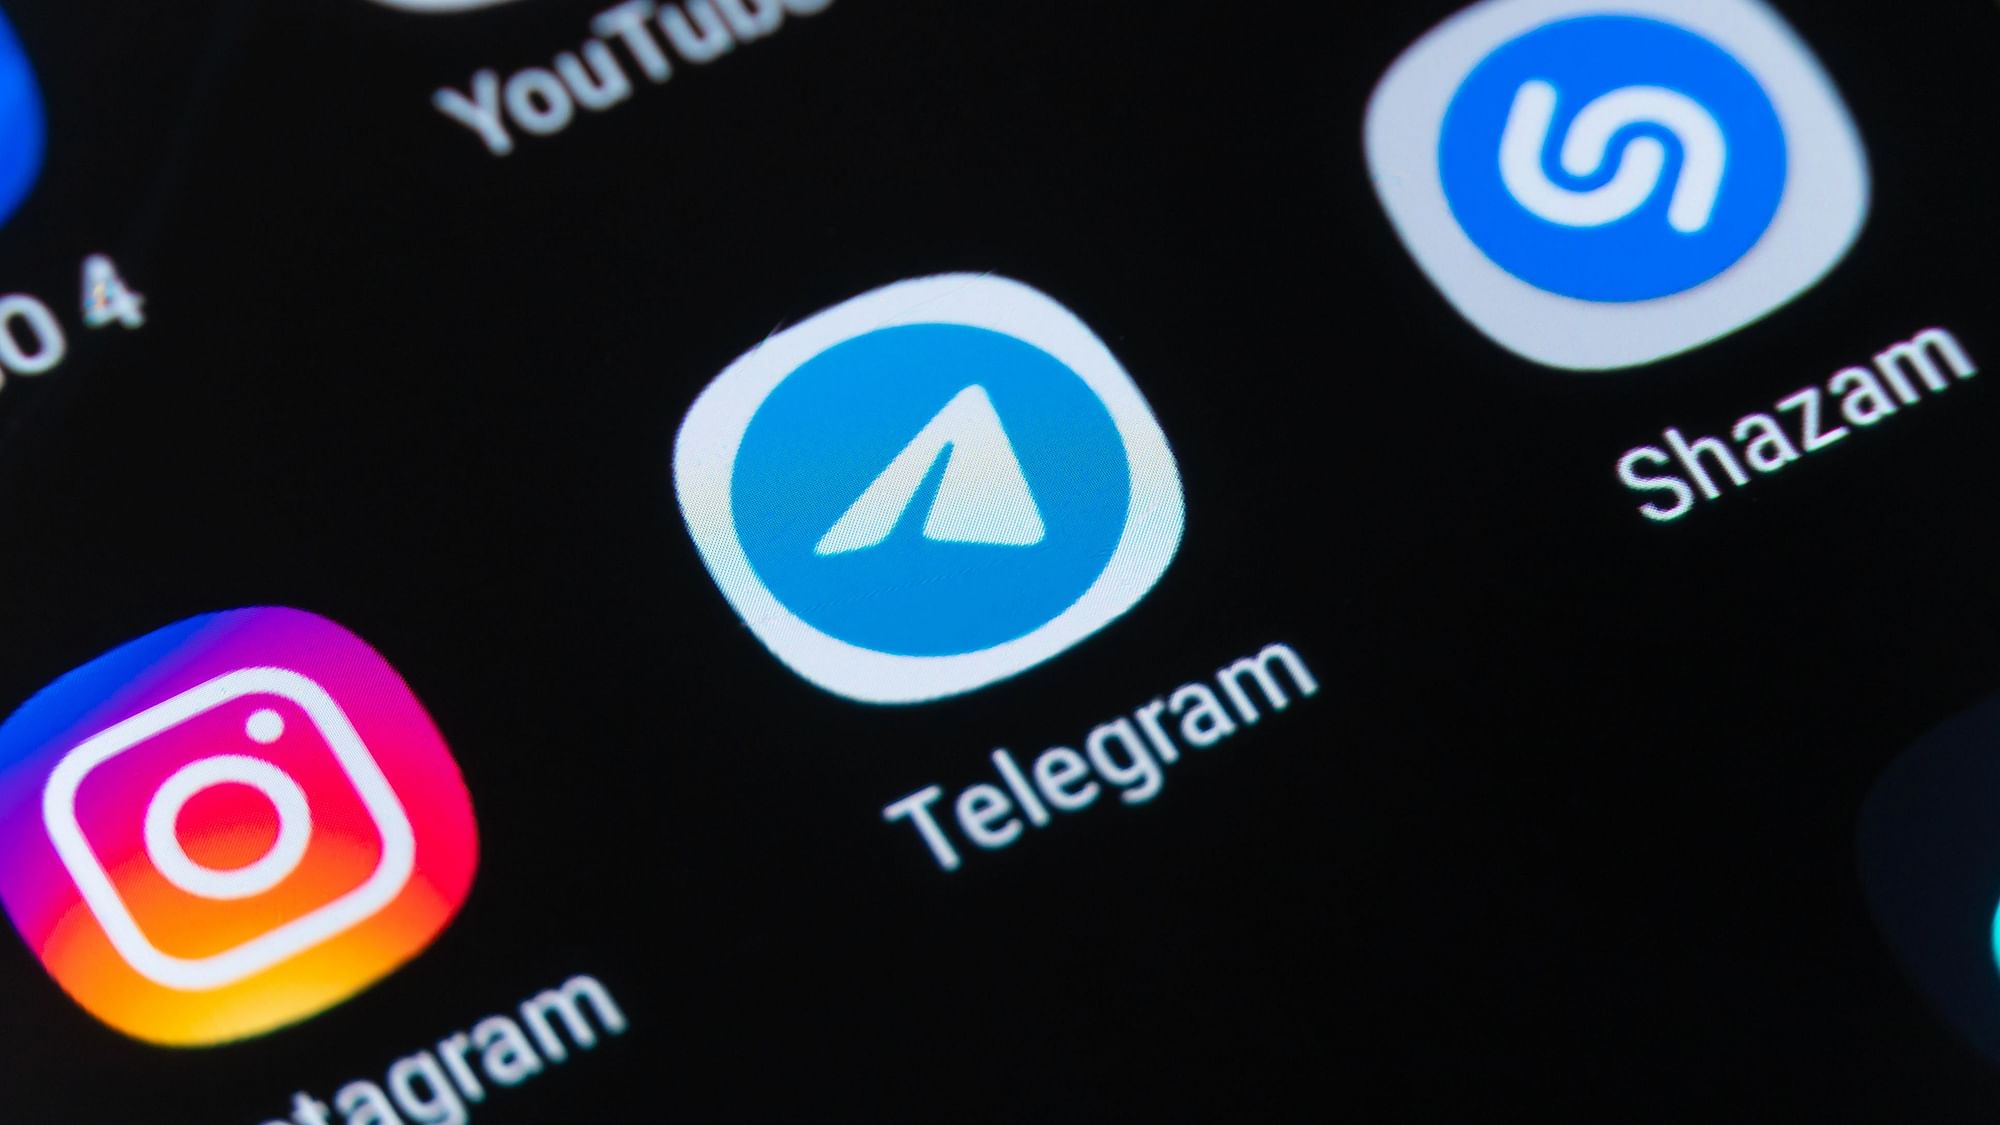 <div class="paragraphs"><p>Telegram Premium plan latest details to know</p></div>